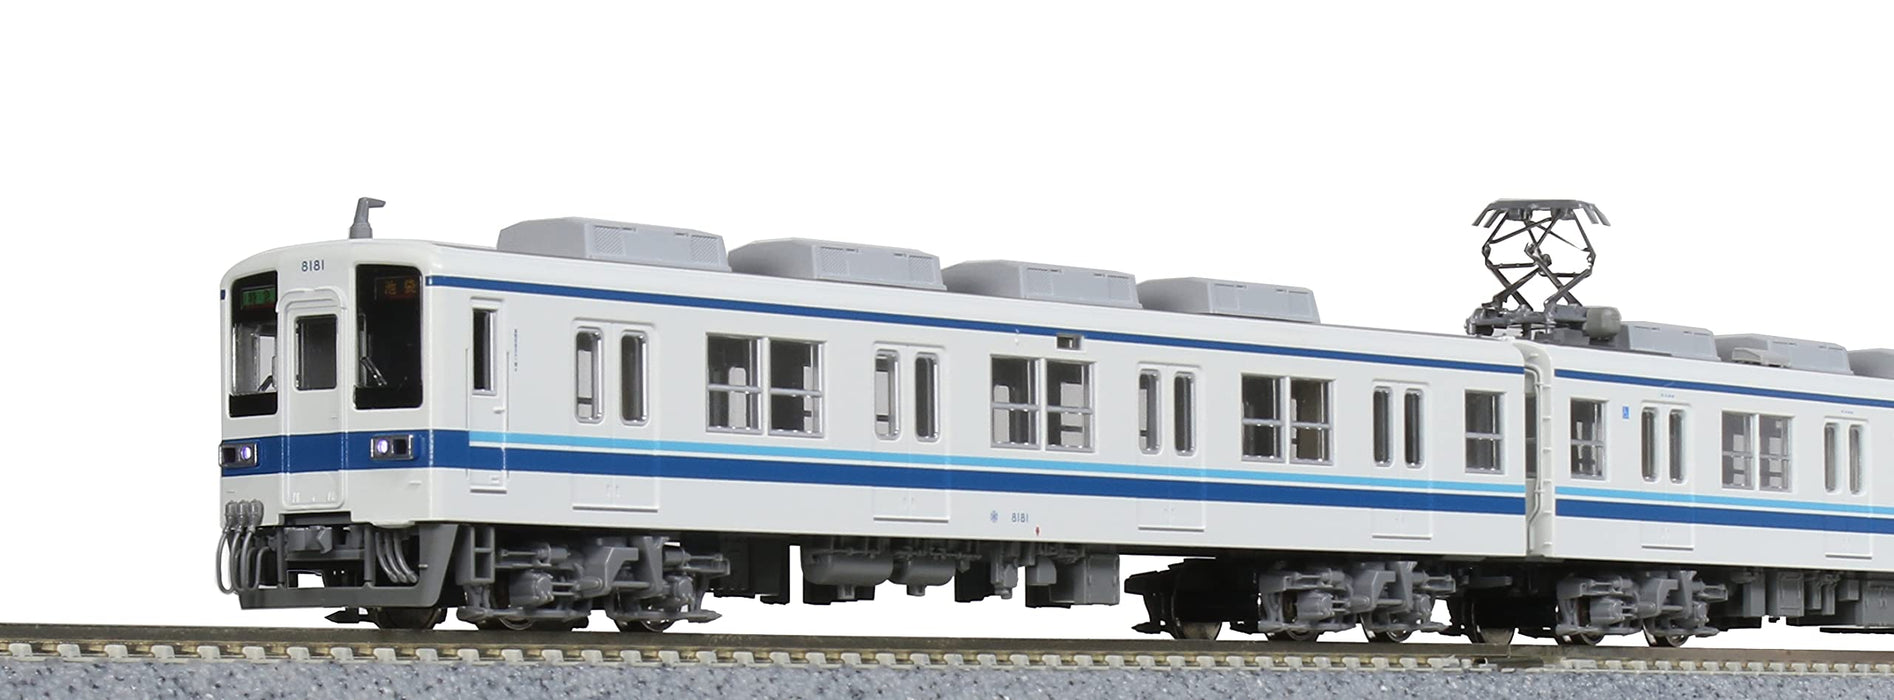 Kato N Gauge 10-1650 Tobu Railway 8000 Series Late Tojo Line 8-Car Train Model